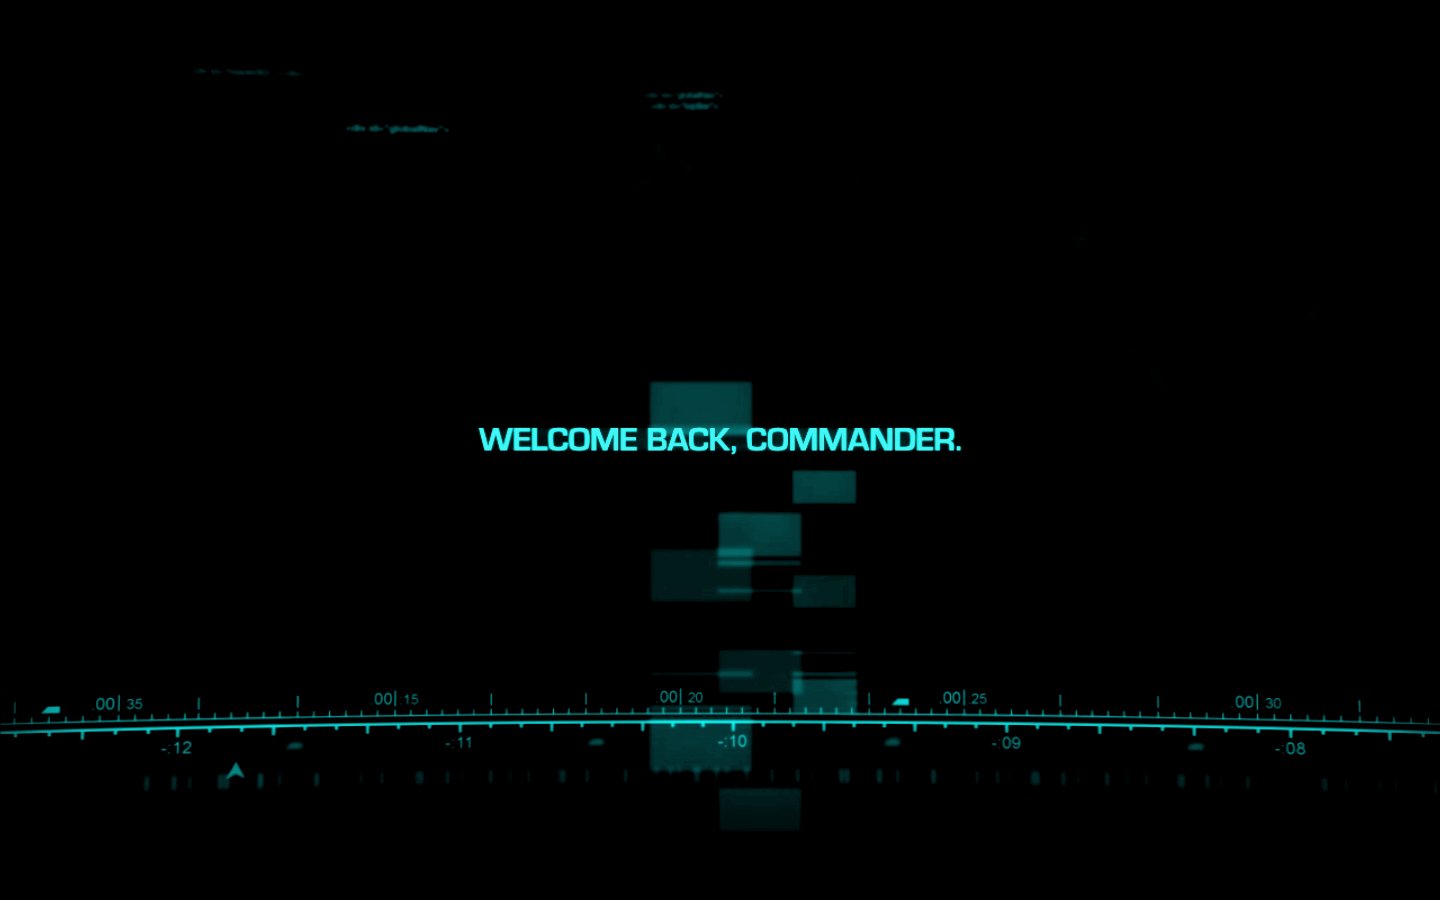 Welcome back, commander!